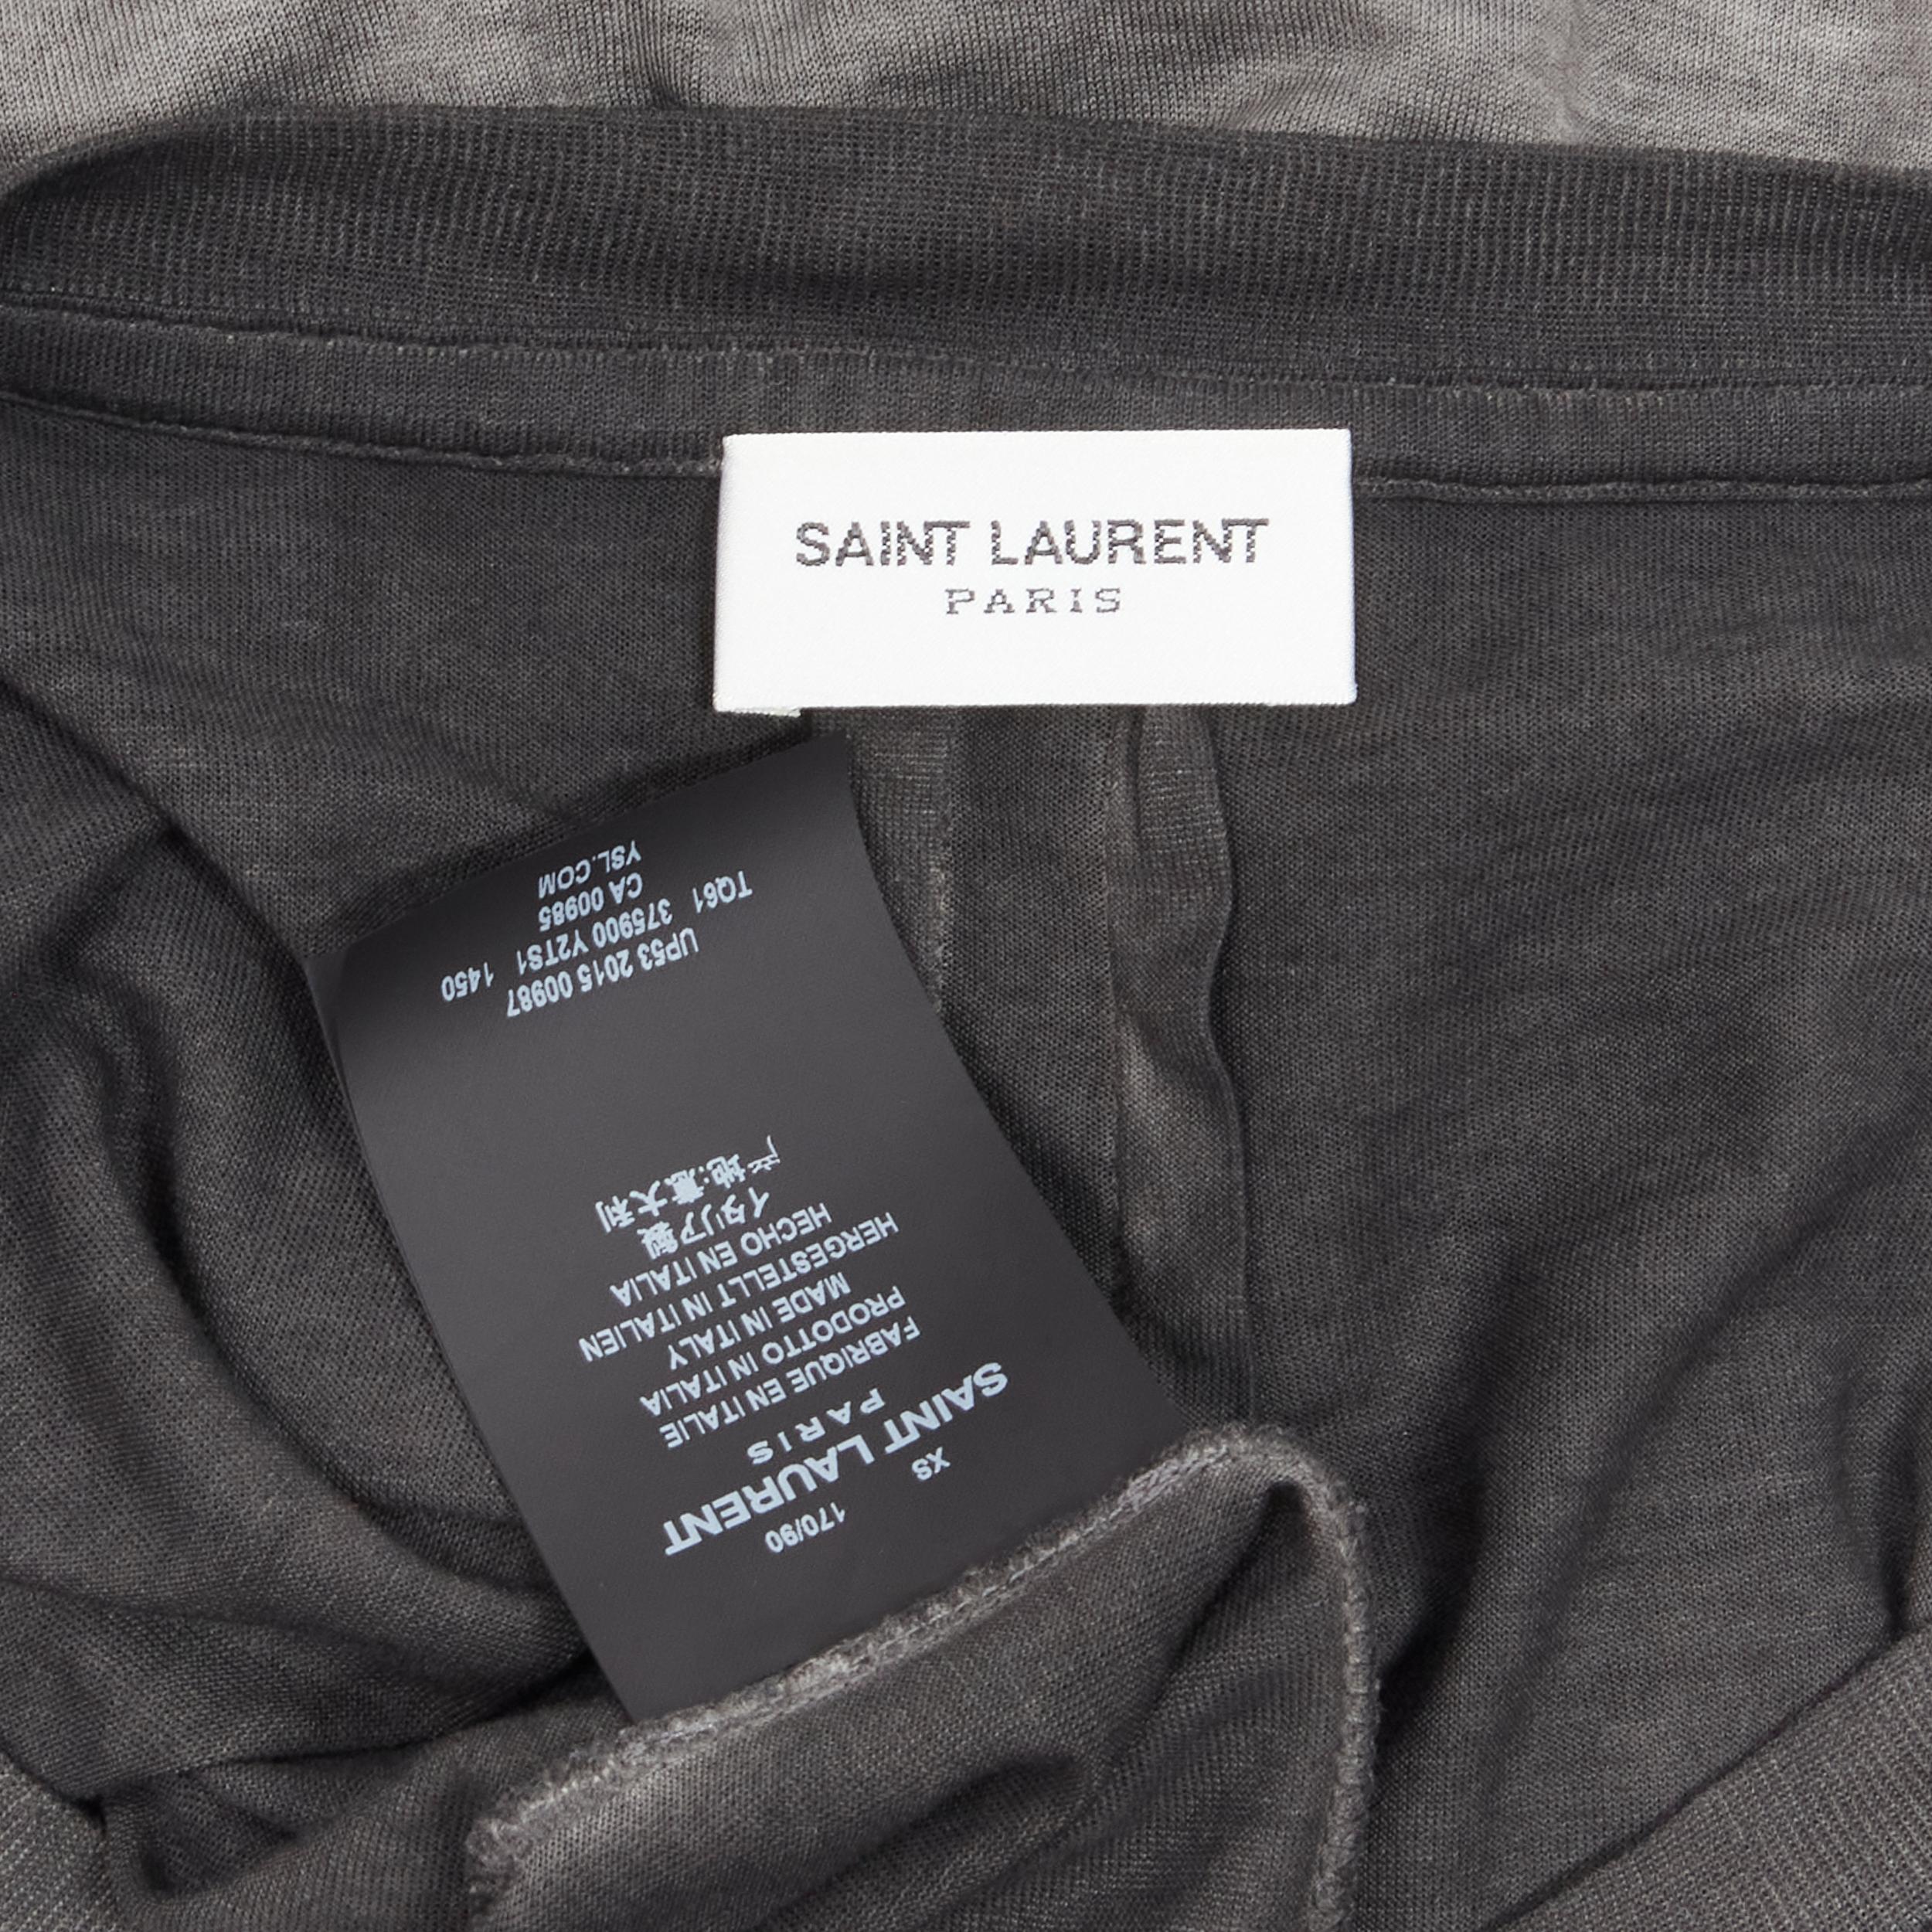 SAINT LAURENT Hedi Slimane 2015 grey washed chest pocket relaxed oversized  For Sale 2